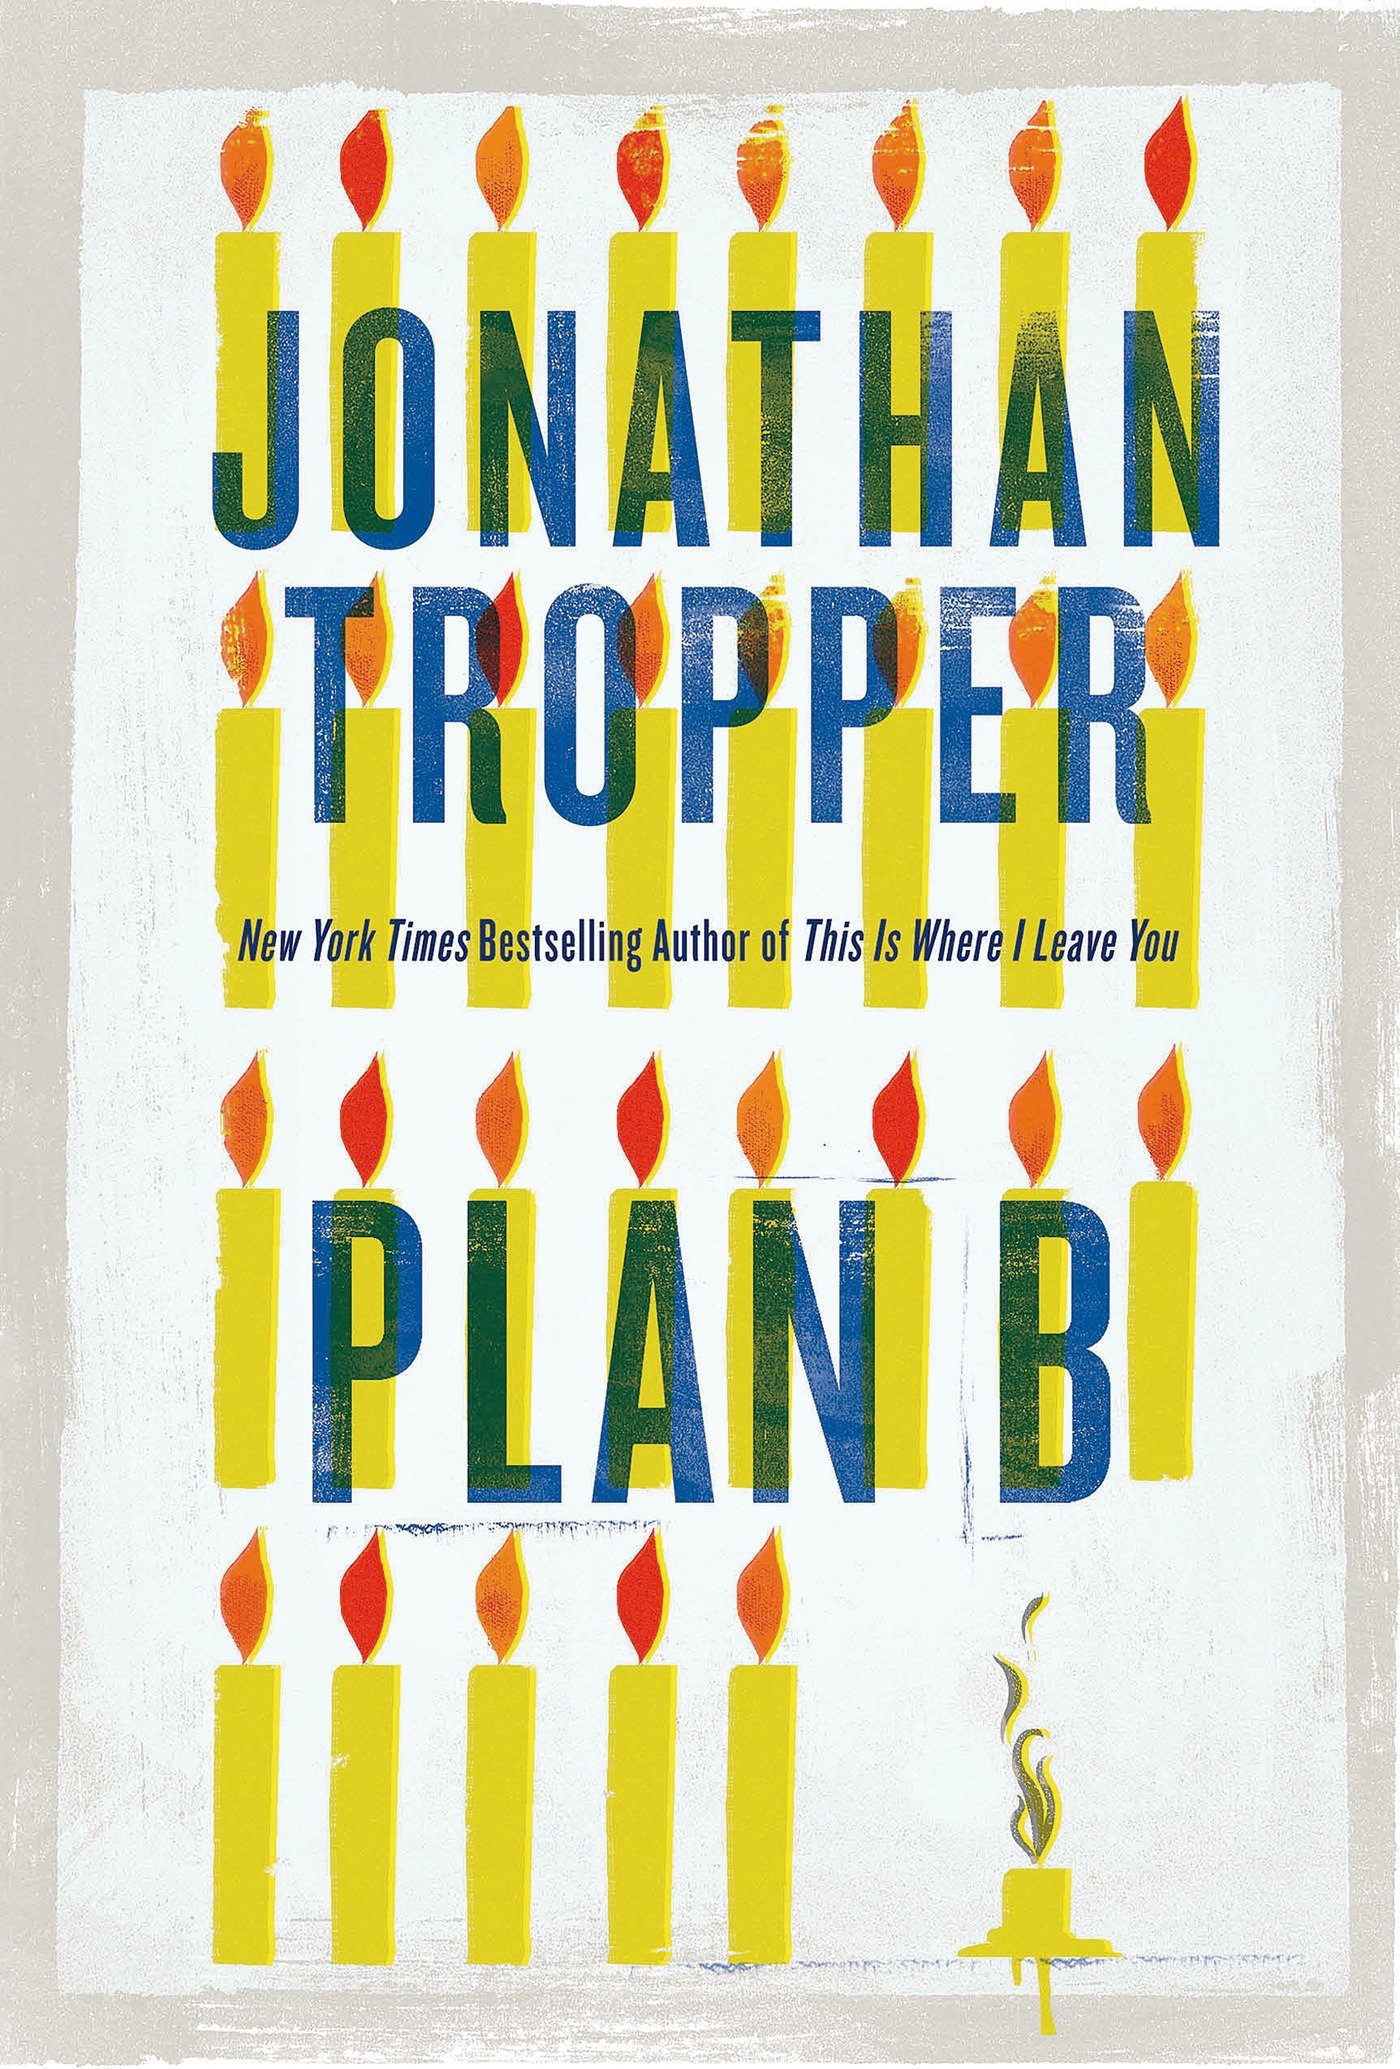 Book Cover Plan B: A Novel